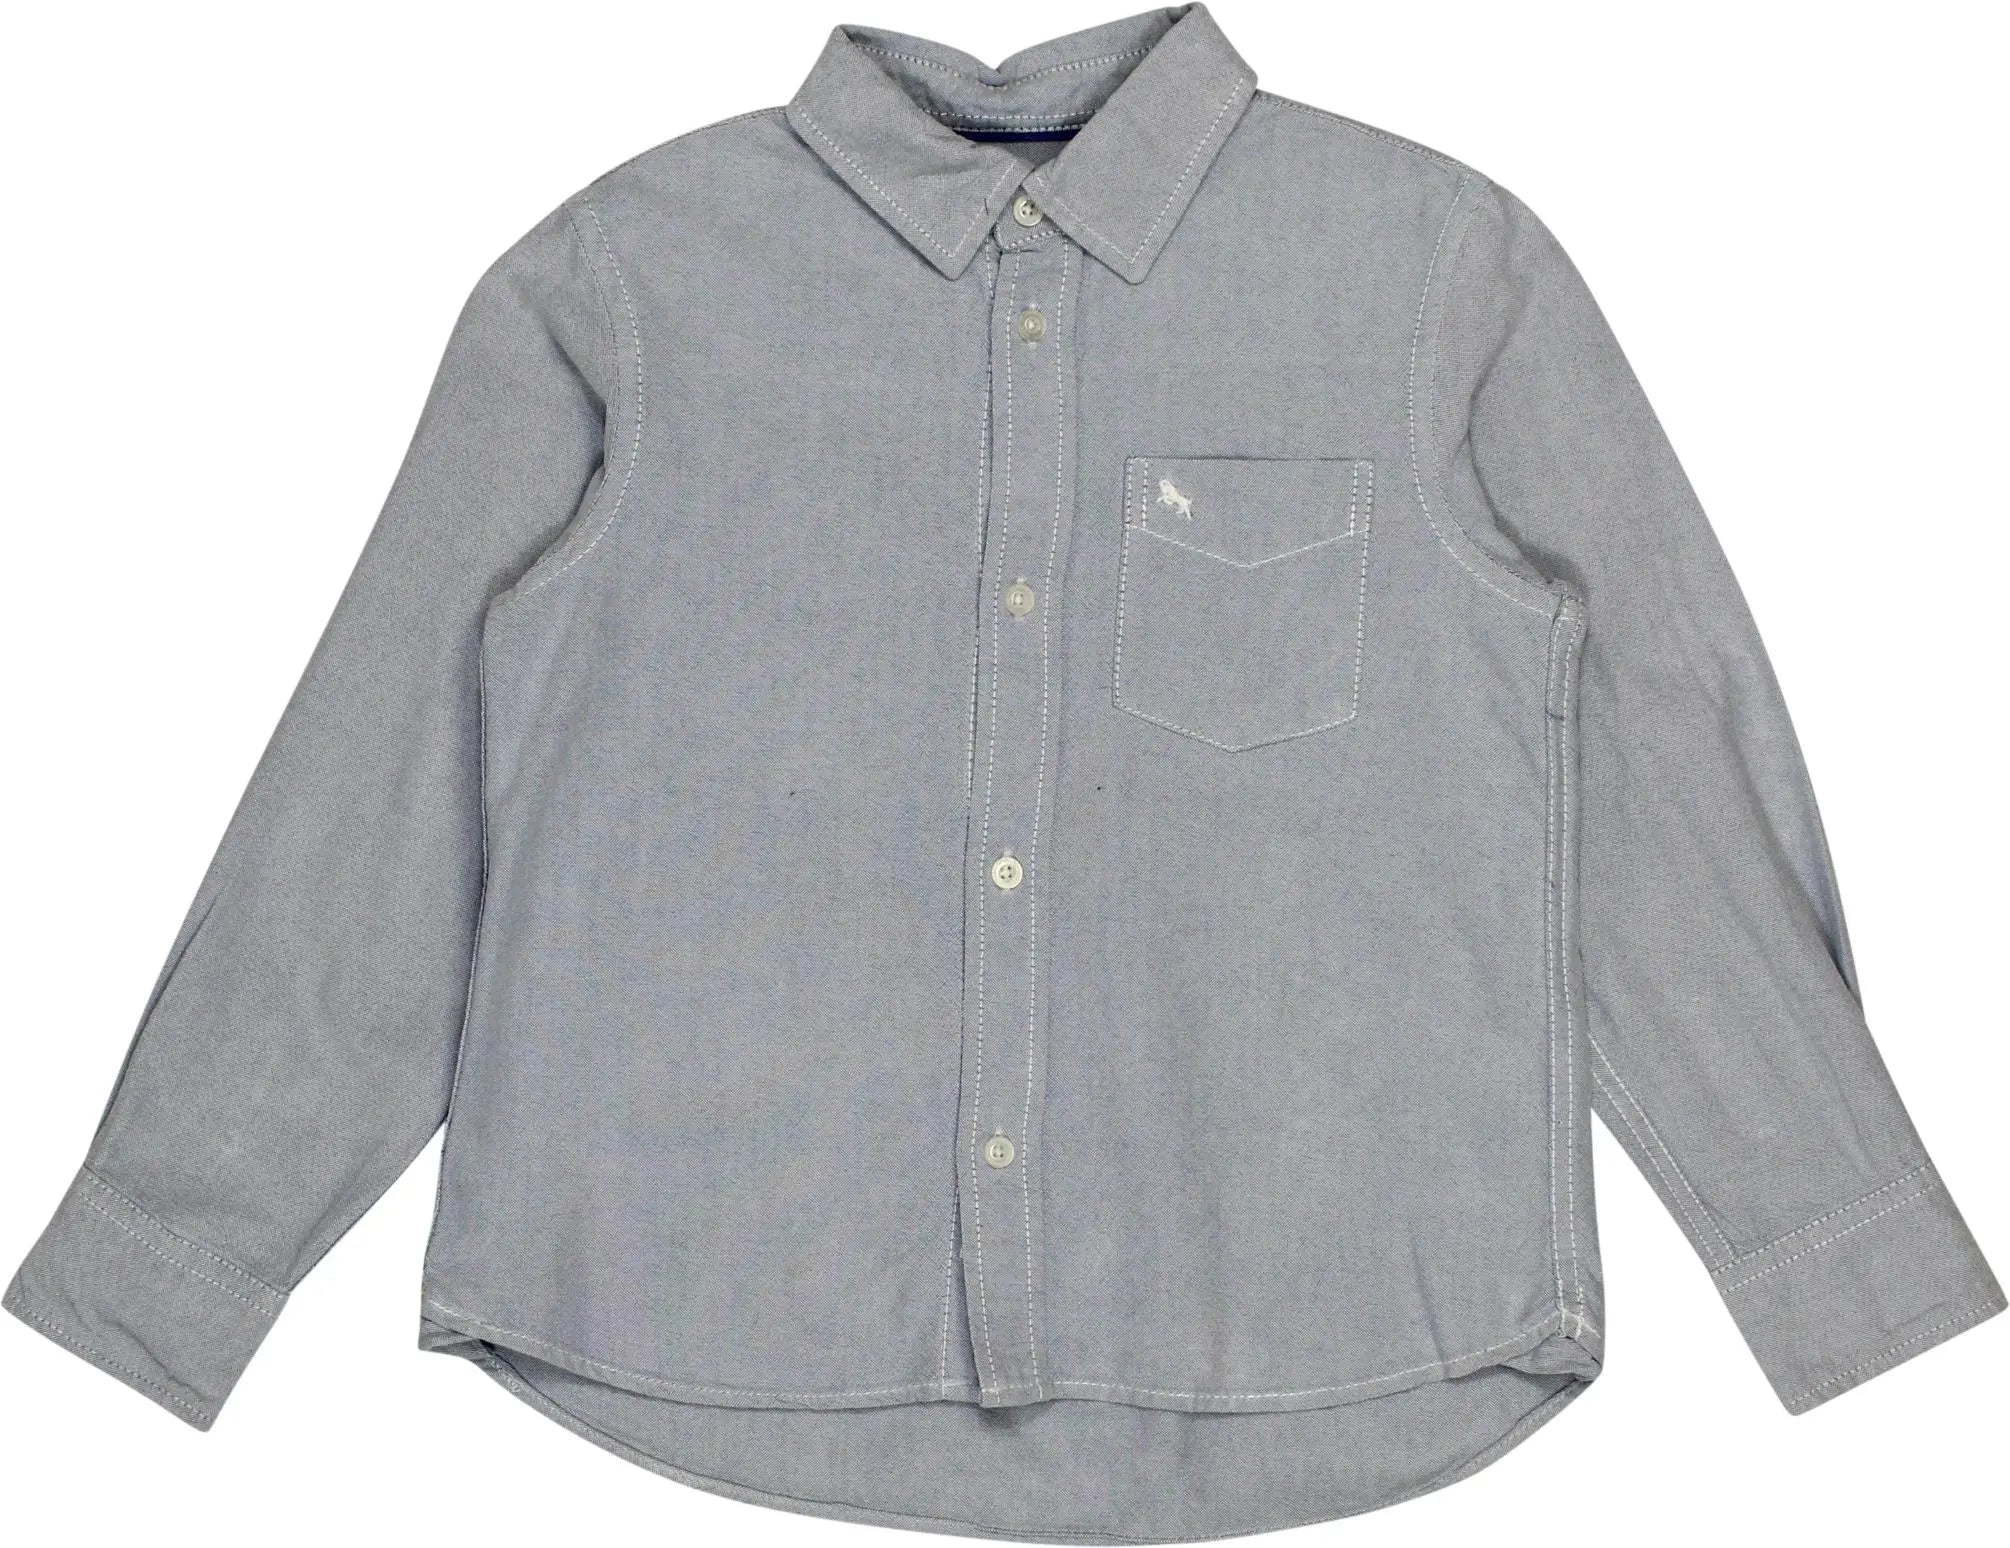 H&M - Denim Shirt- ThriftTale.com - Vintage and second handclothing